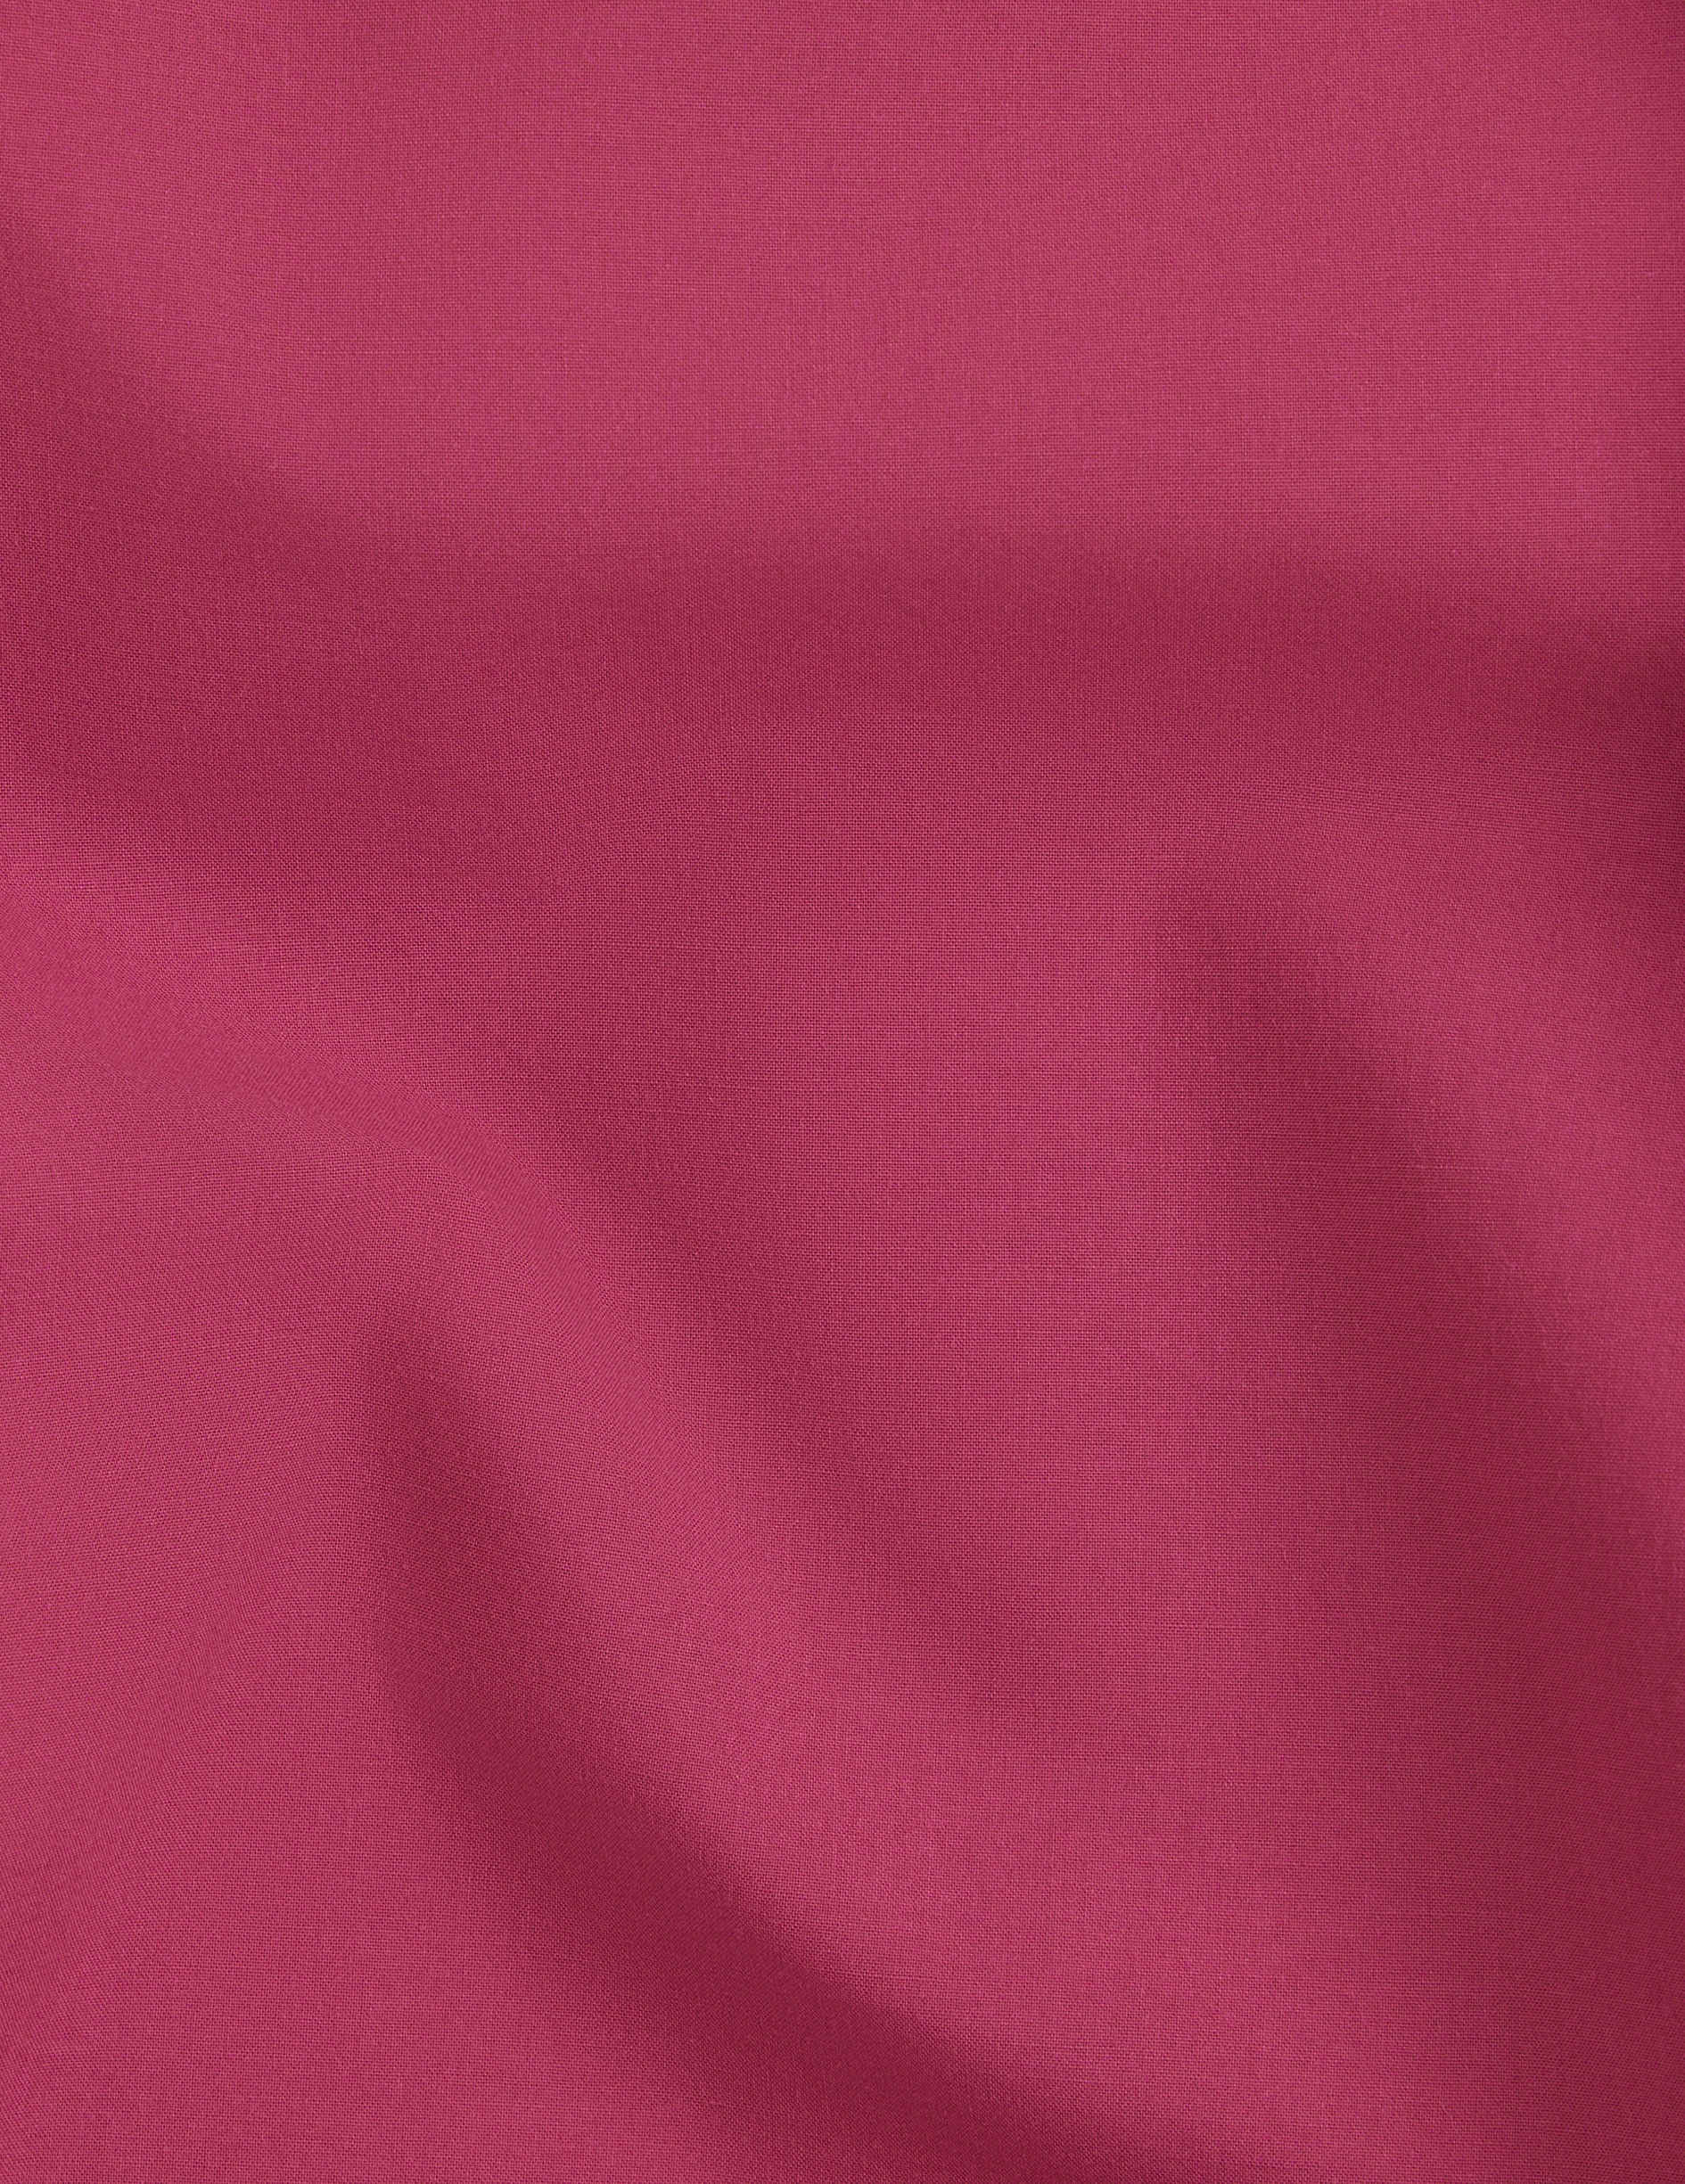 Fuchsia pink delina oversized shirt - Poplin